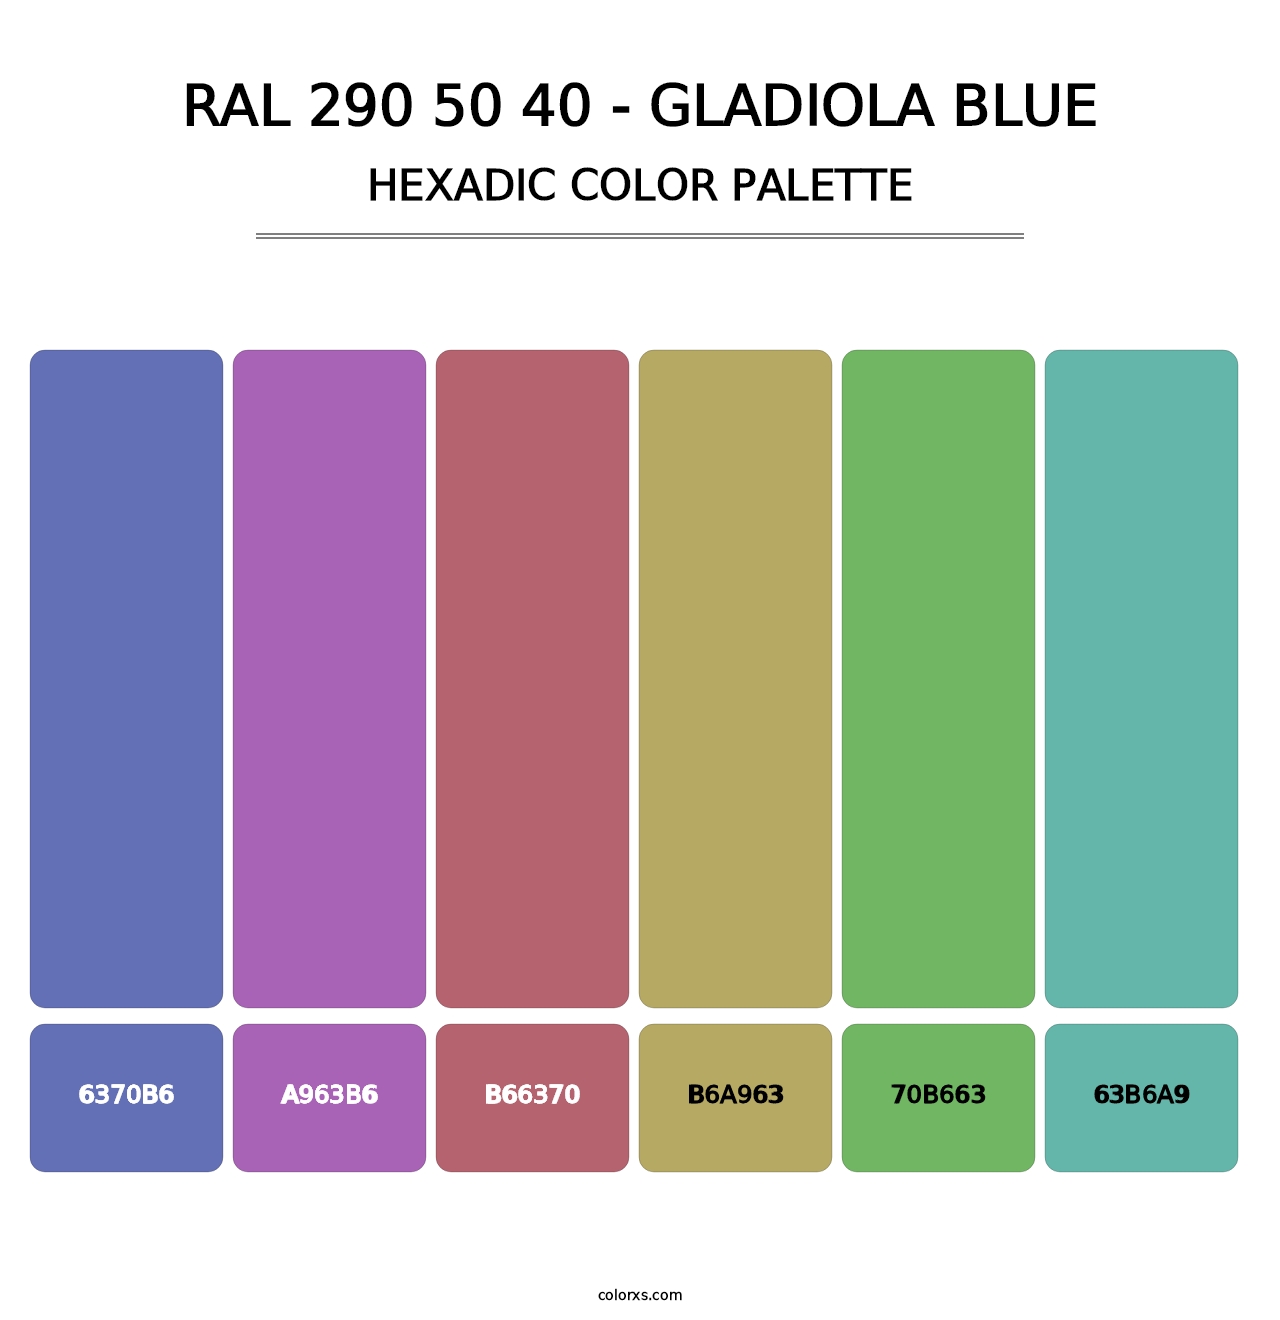 RAL 290 50 40 - Gladiola Blue - Hexadic Color Palette